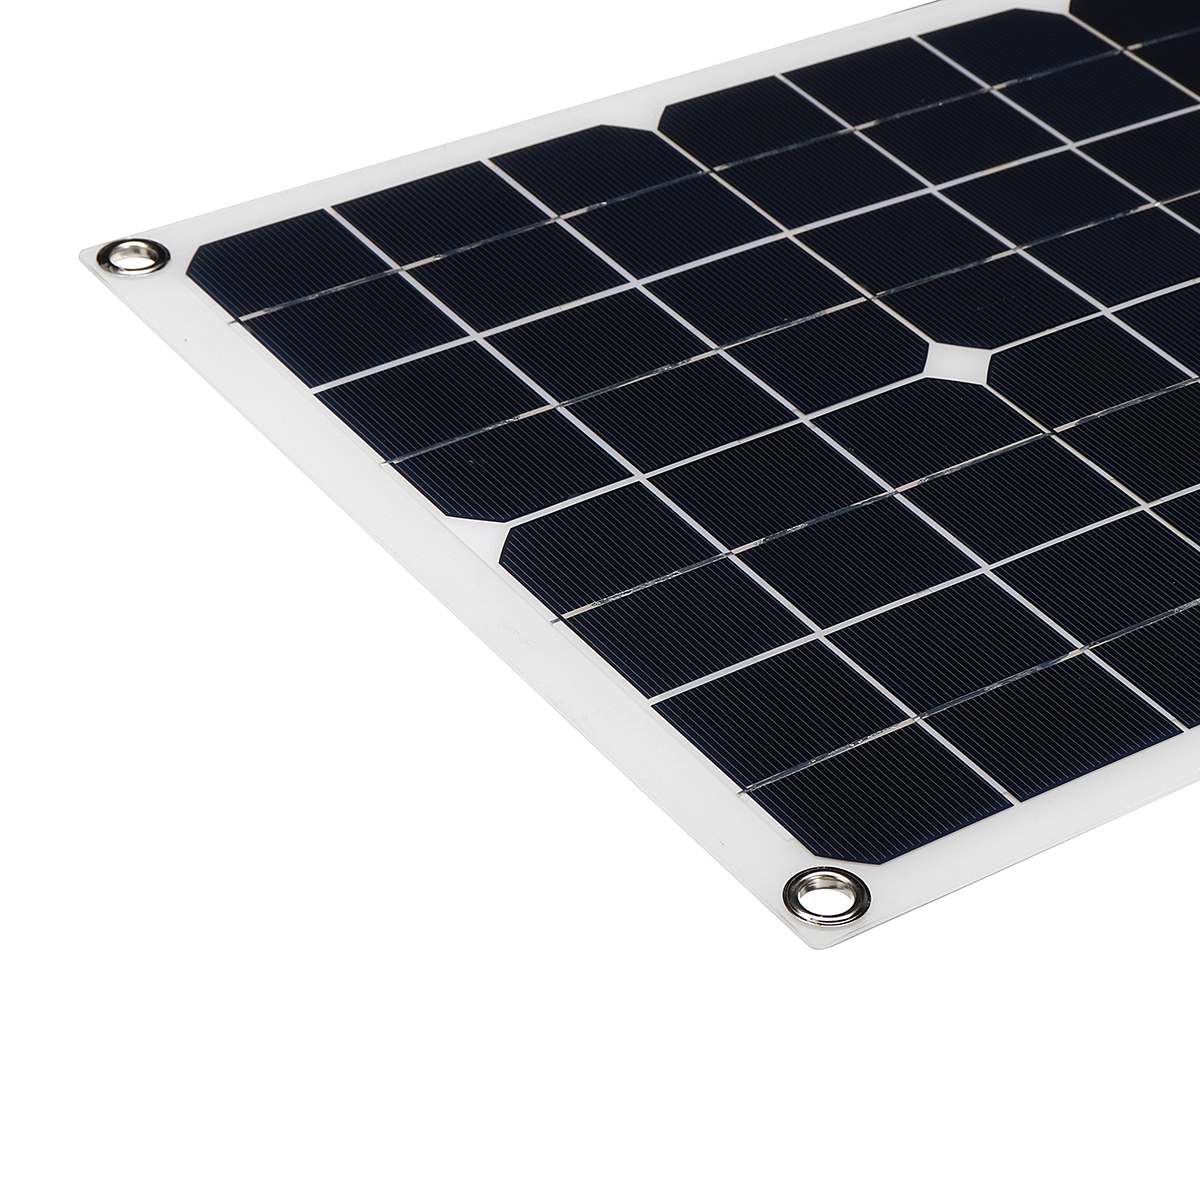 20W 430*280*2.5mm Monocrystalline Solar Panel with 18V DC Plug & 5V USB Output High Efficiency & Light Weight 39